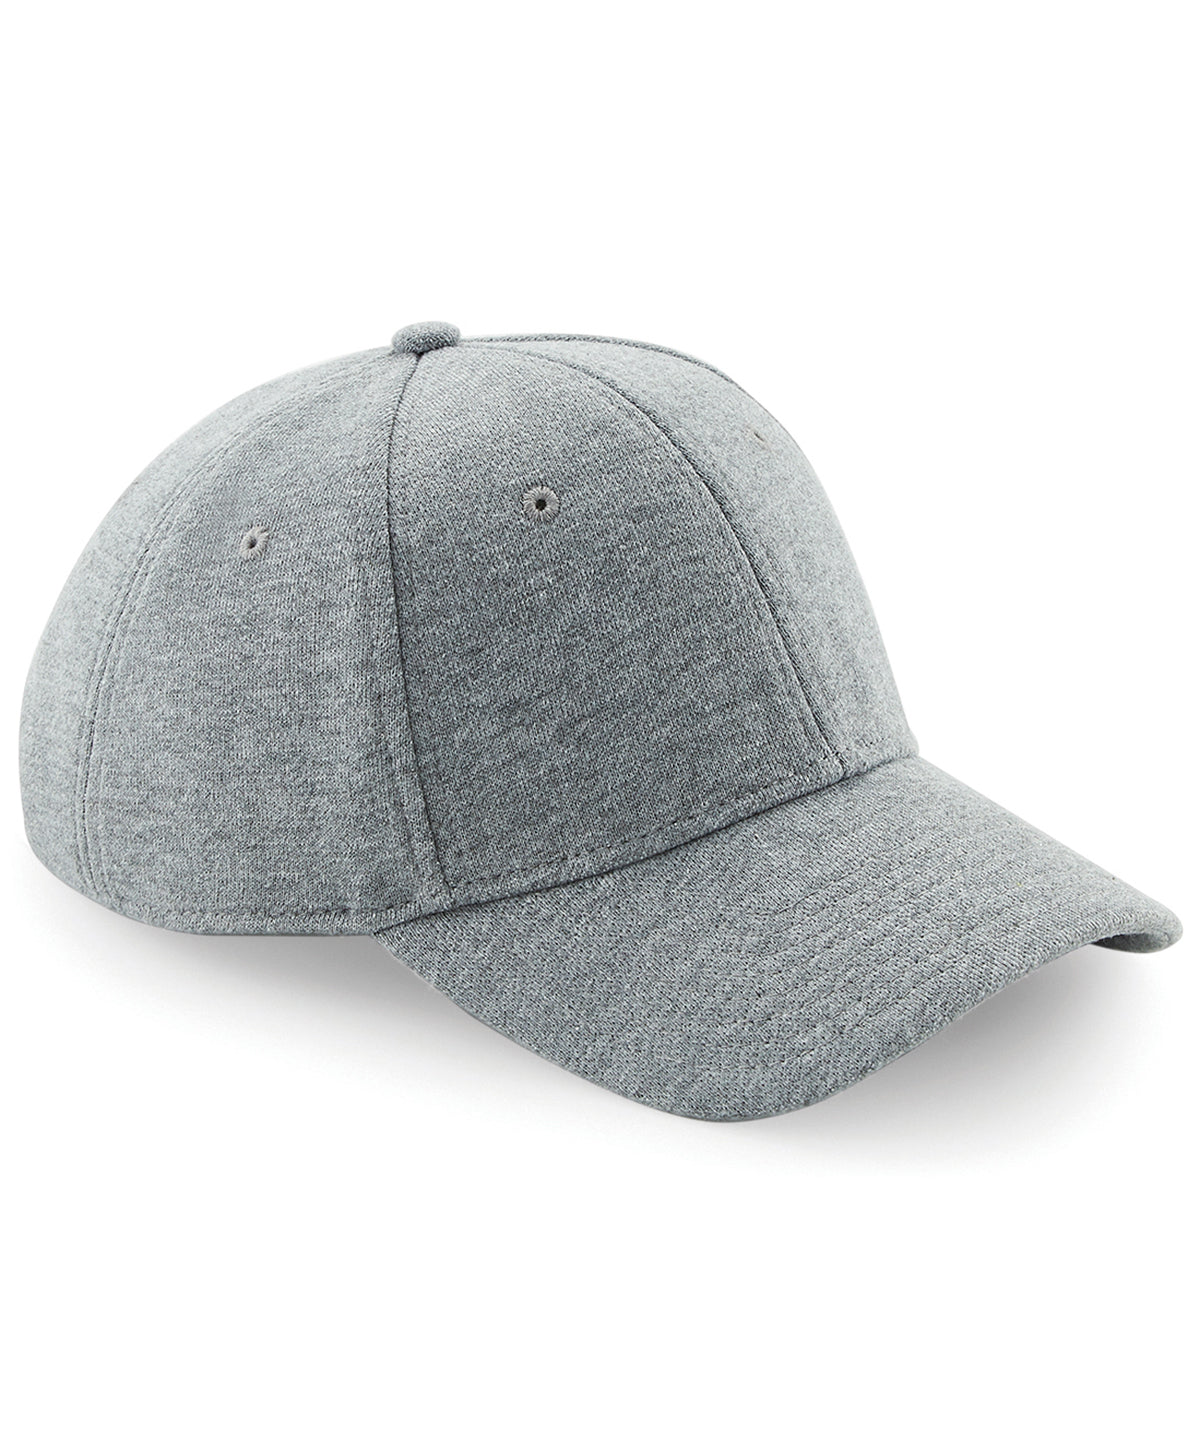 Personalised Caps - Heather Grey Beechfield Jersey athleisure baseball cap